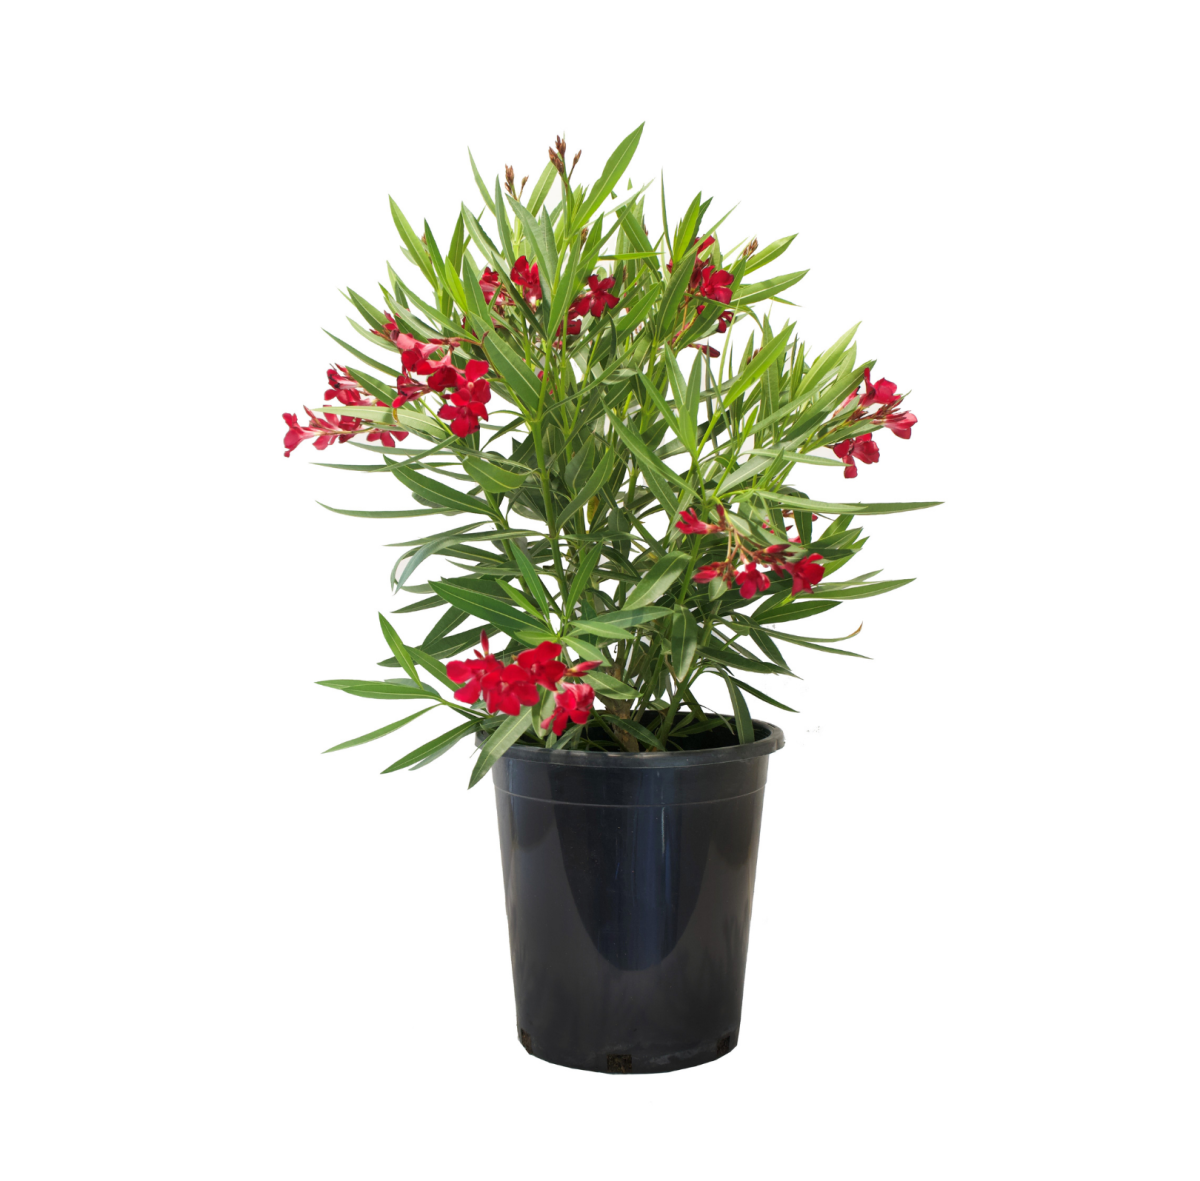 Red Oleander Bush in a black nursery pot